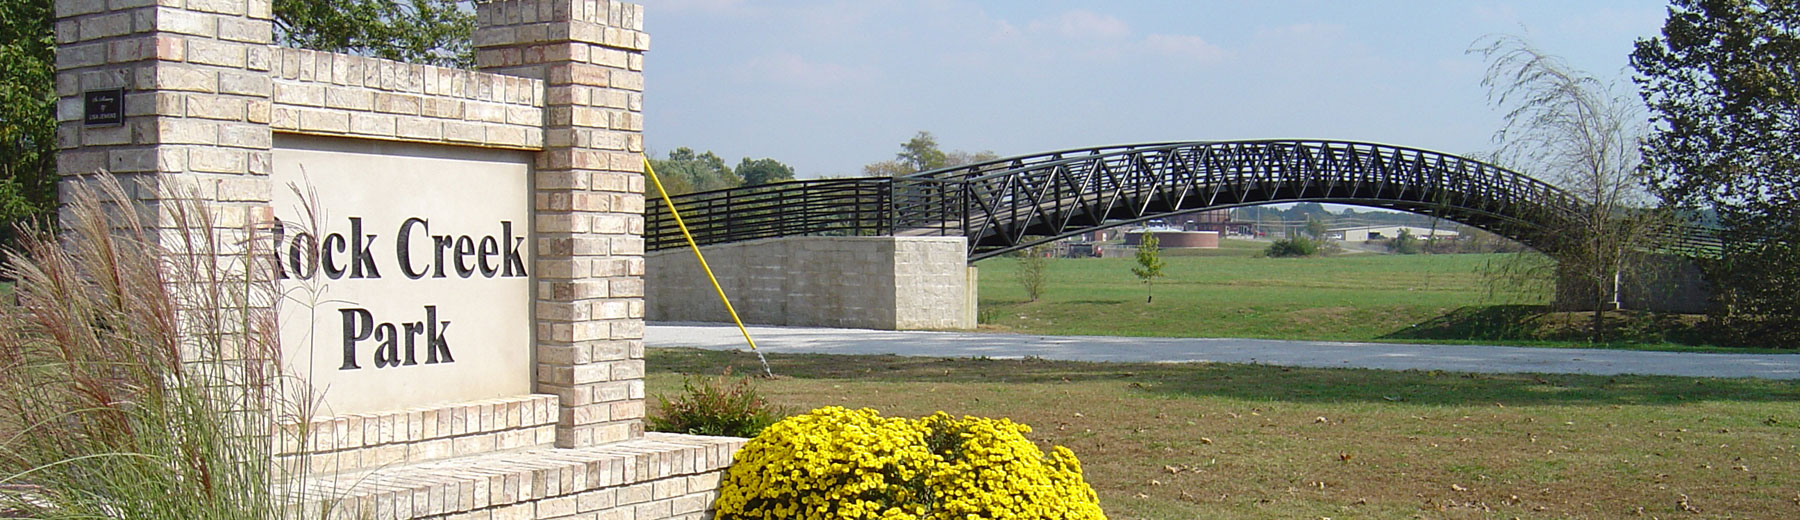 Rock Creek Park sign and bridge